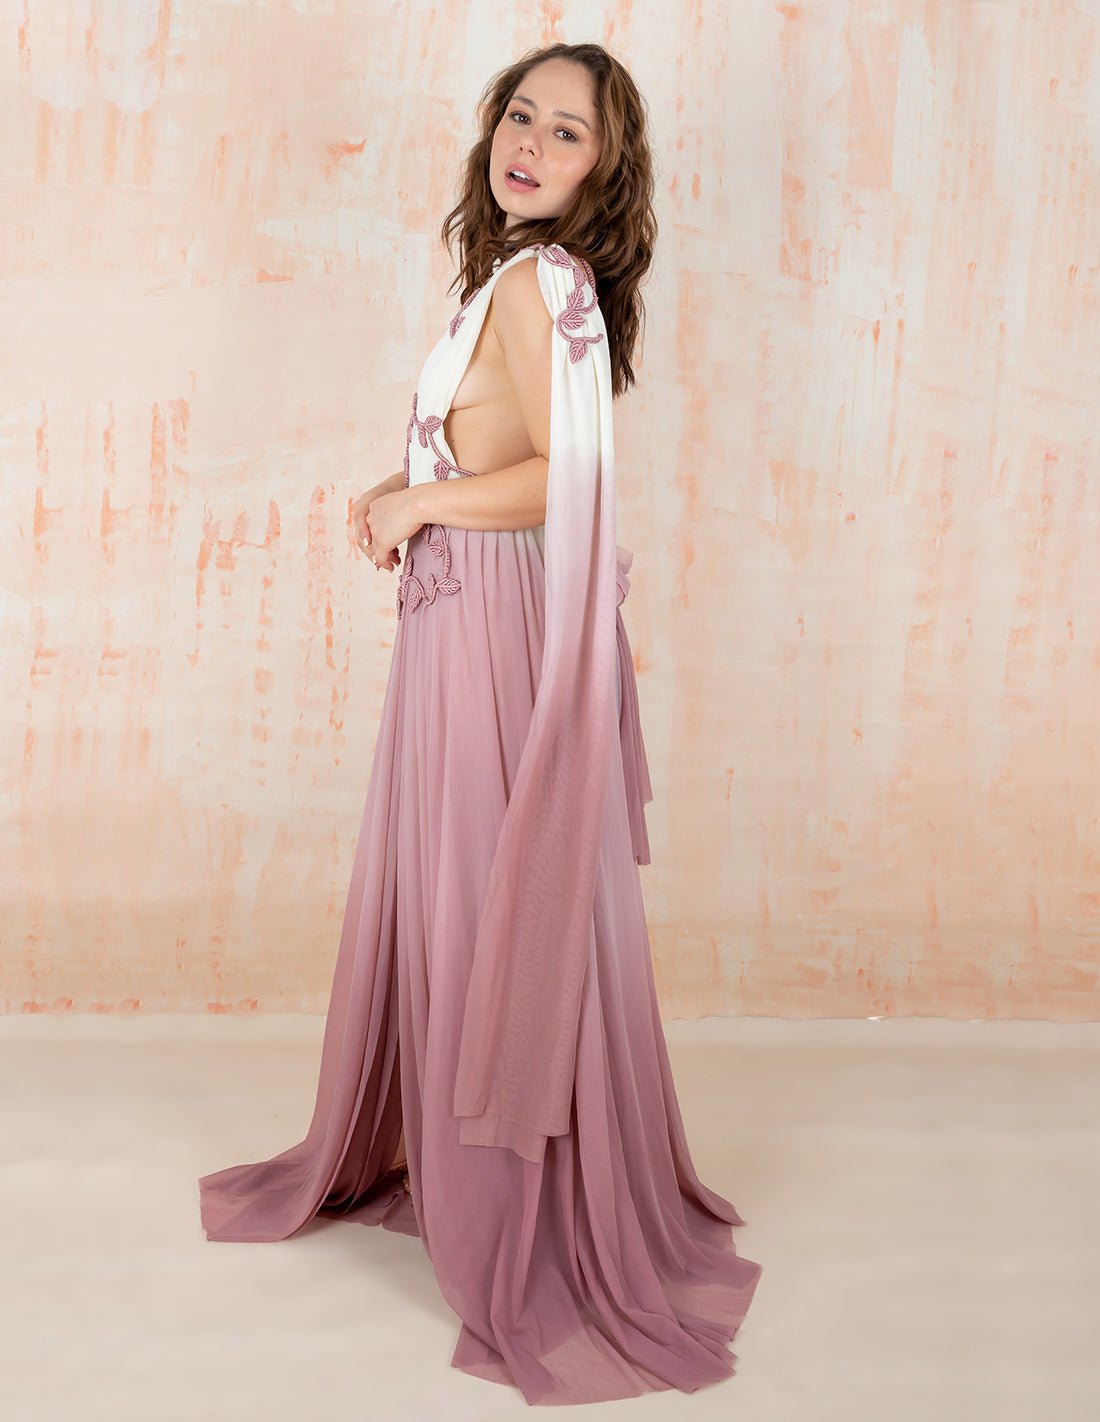 Copernico Dress Ivory + Coral Blush - Dress - Entreaguas Wearable Art